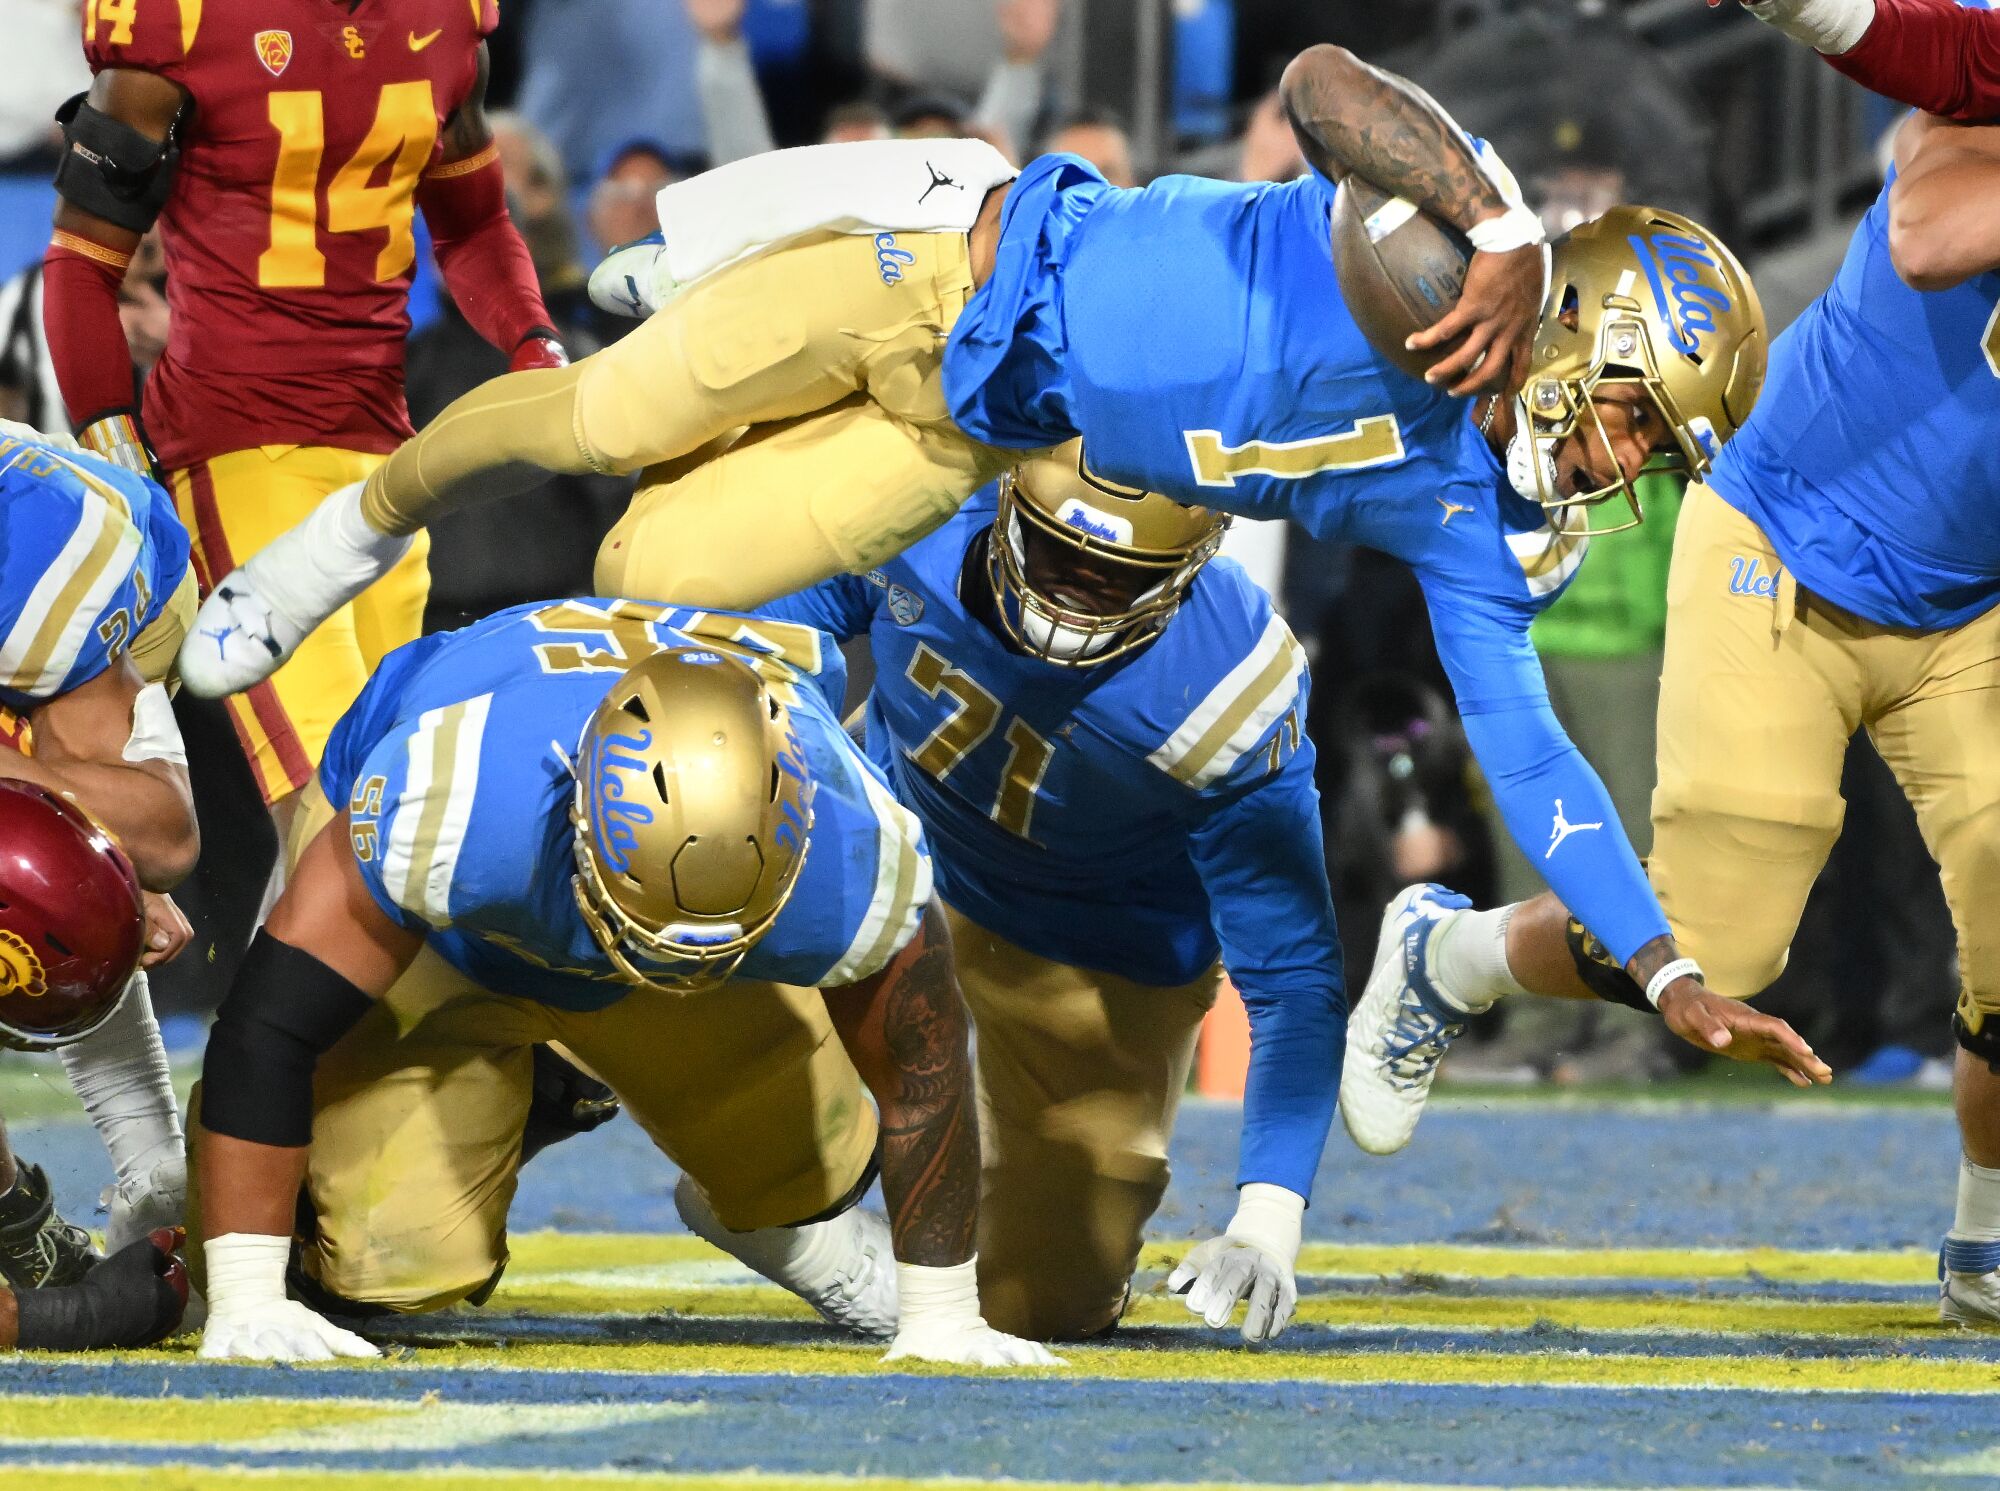 UCLA quarterback Dorian Thompson-Robinson sores a touchdown against USC in the first quarter.